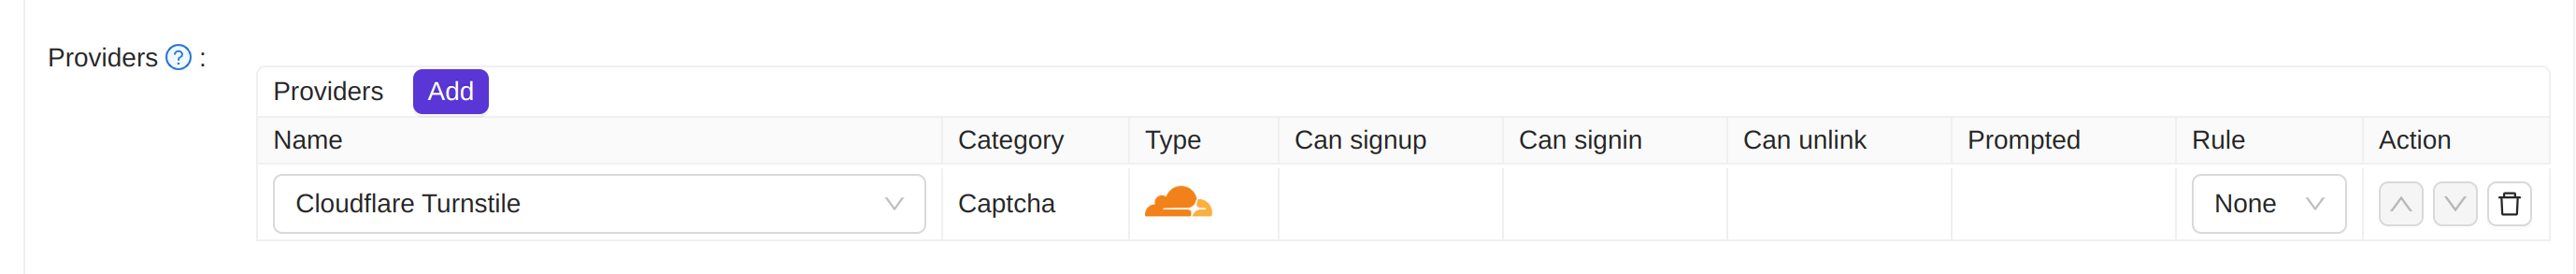 Aplicativo provedor do Cloudflare Turnstile